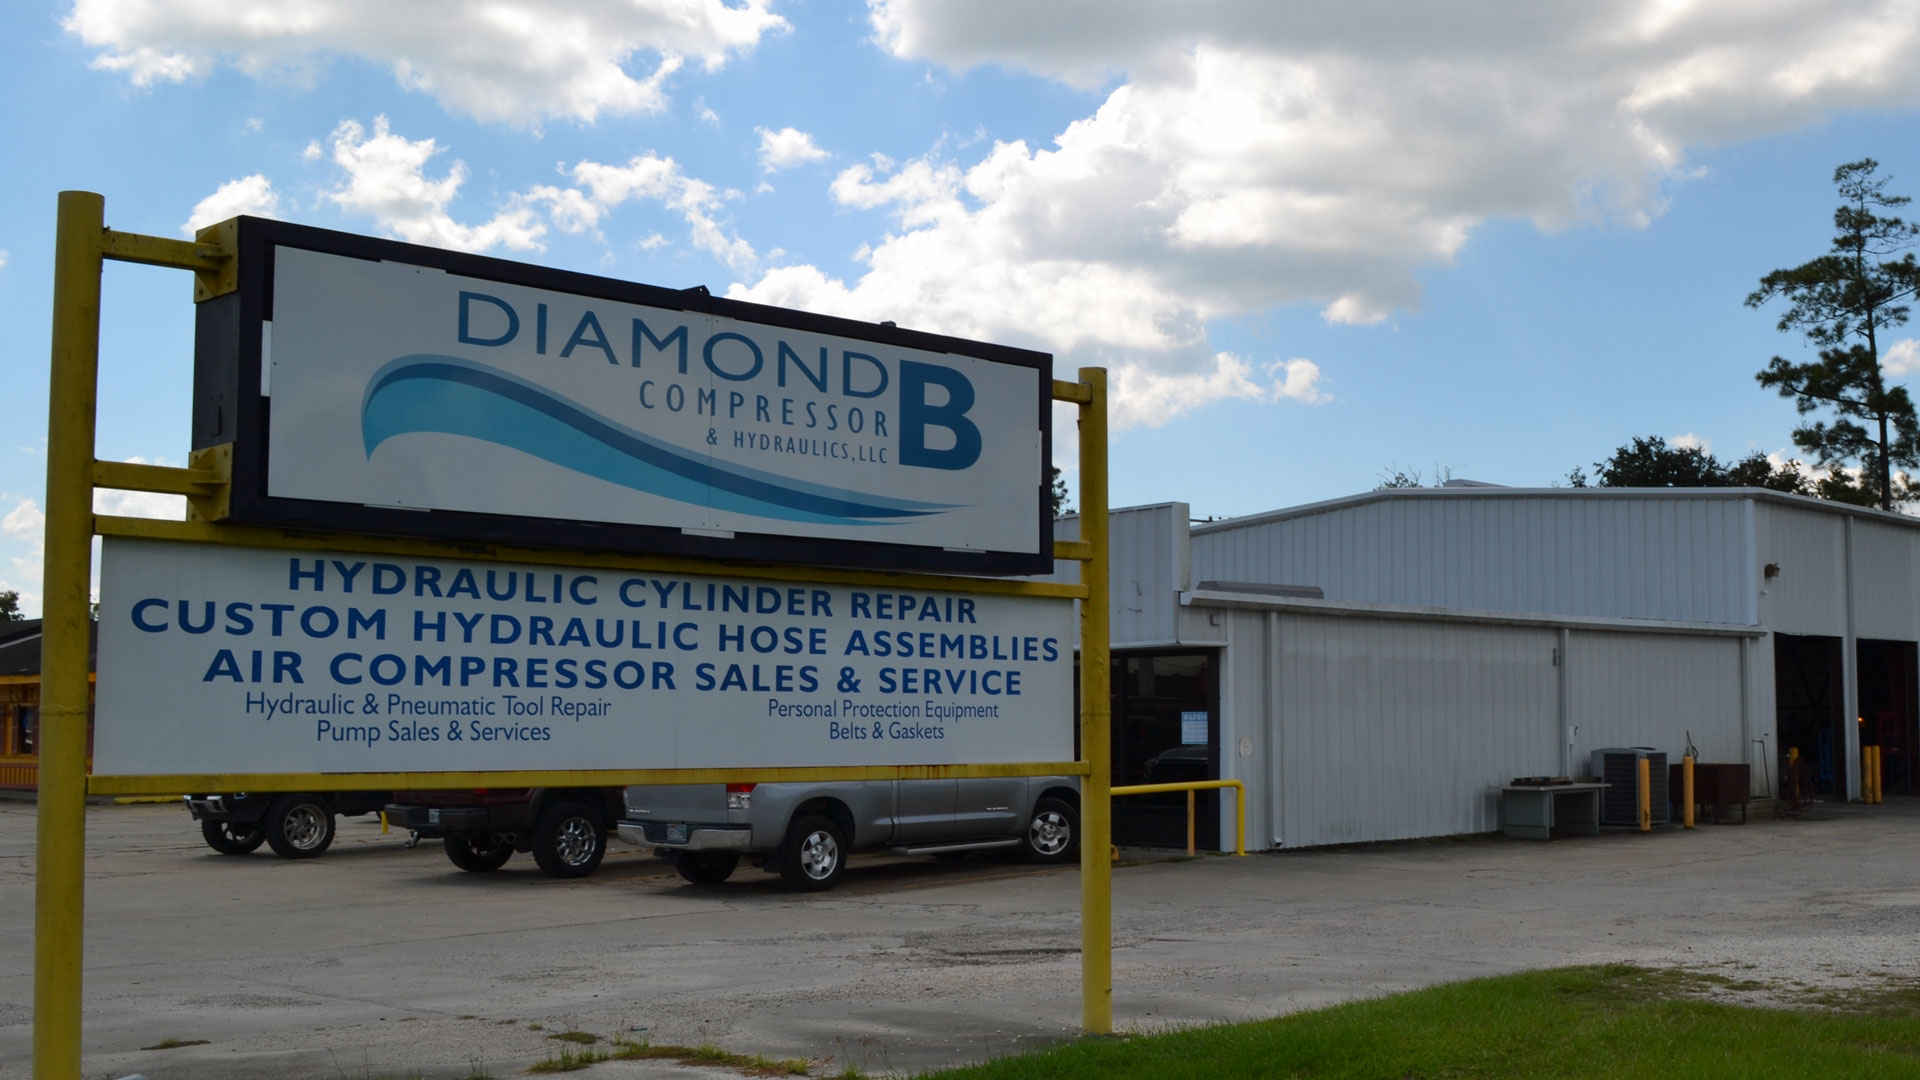 Diamond B Compressor & Hydraulics, LLC Photo